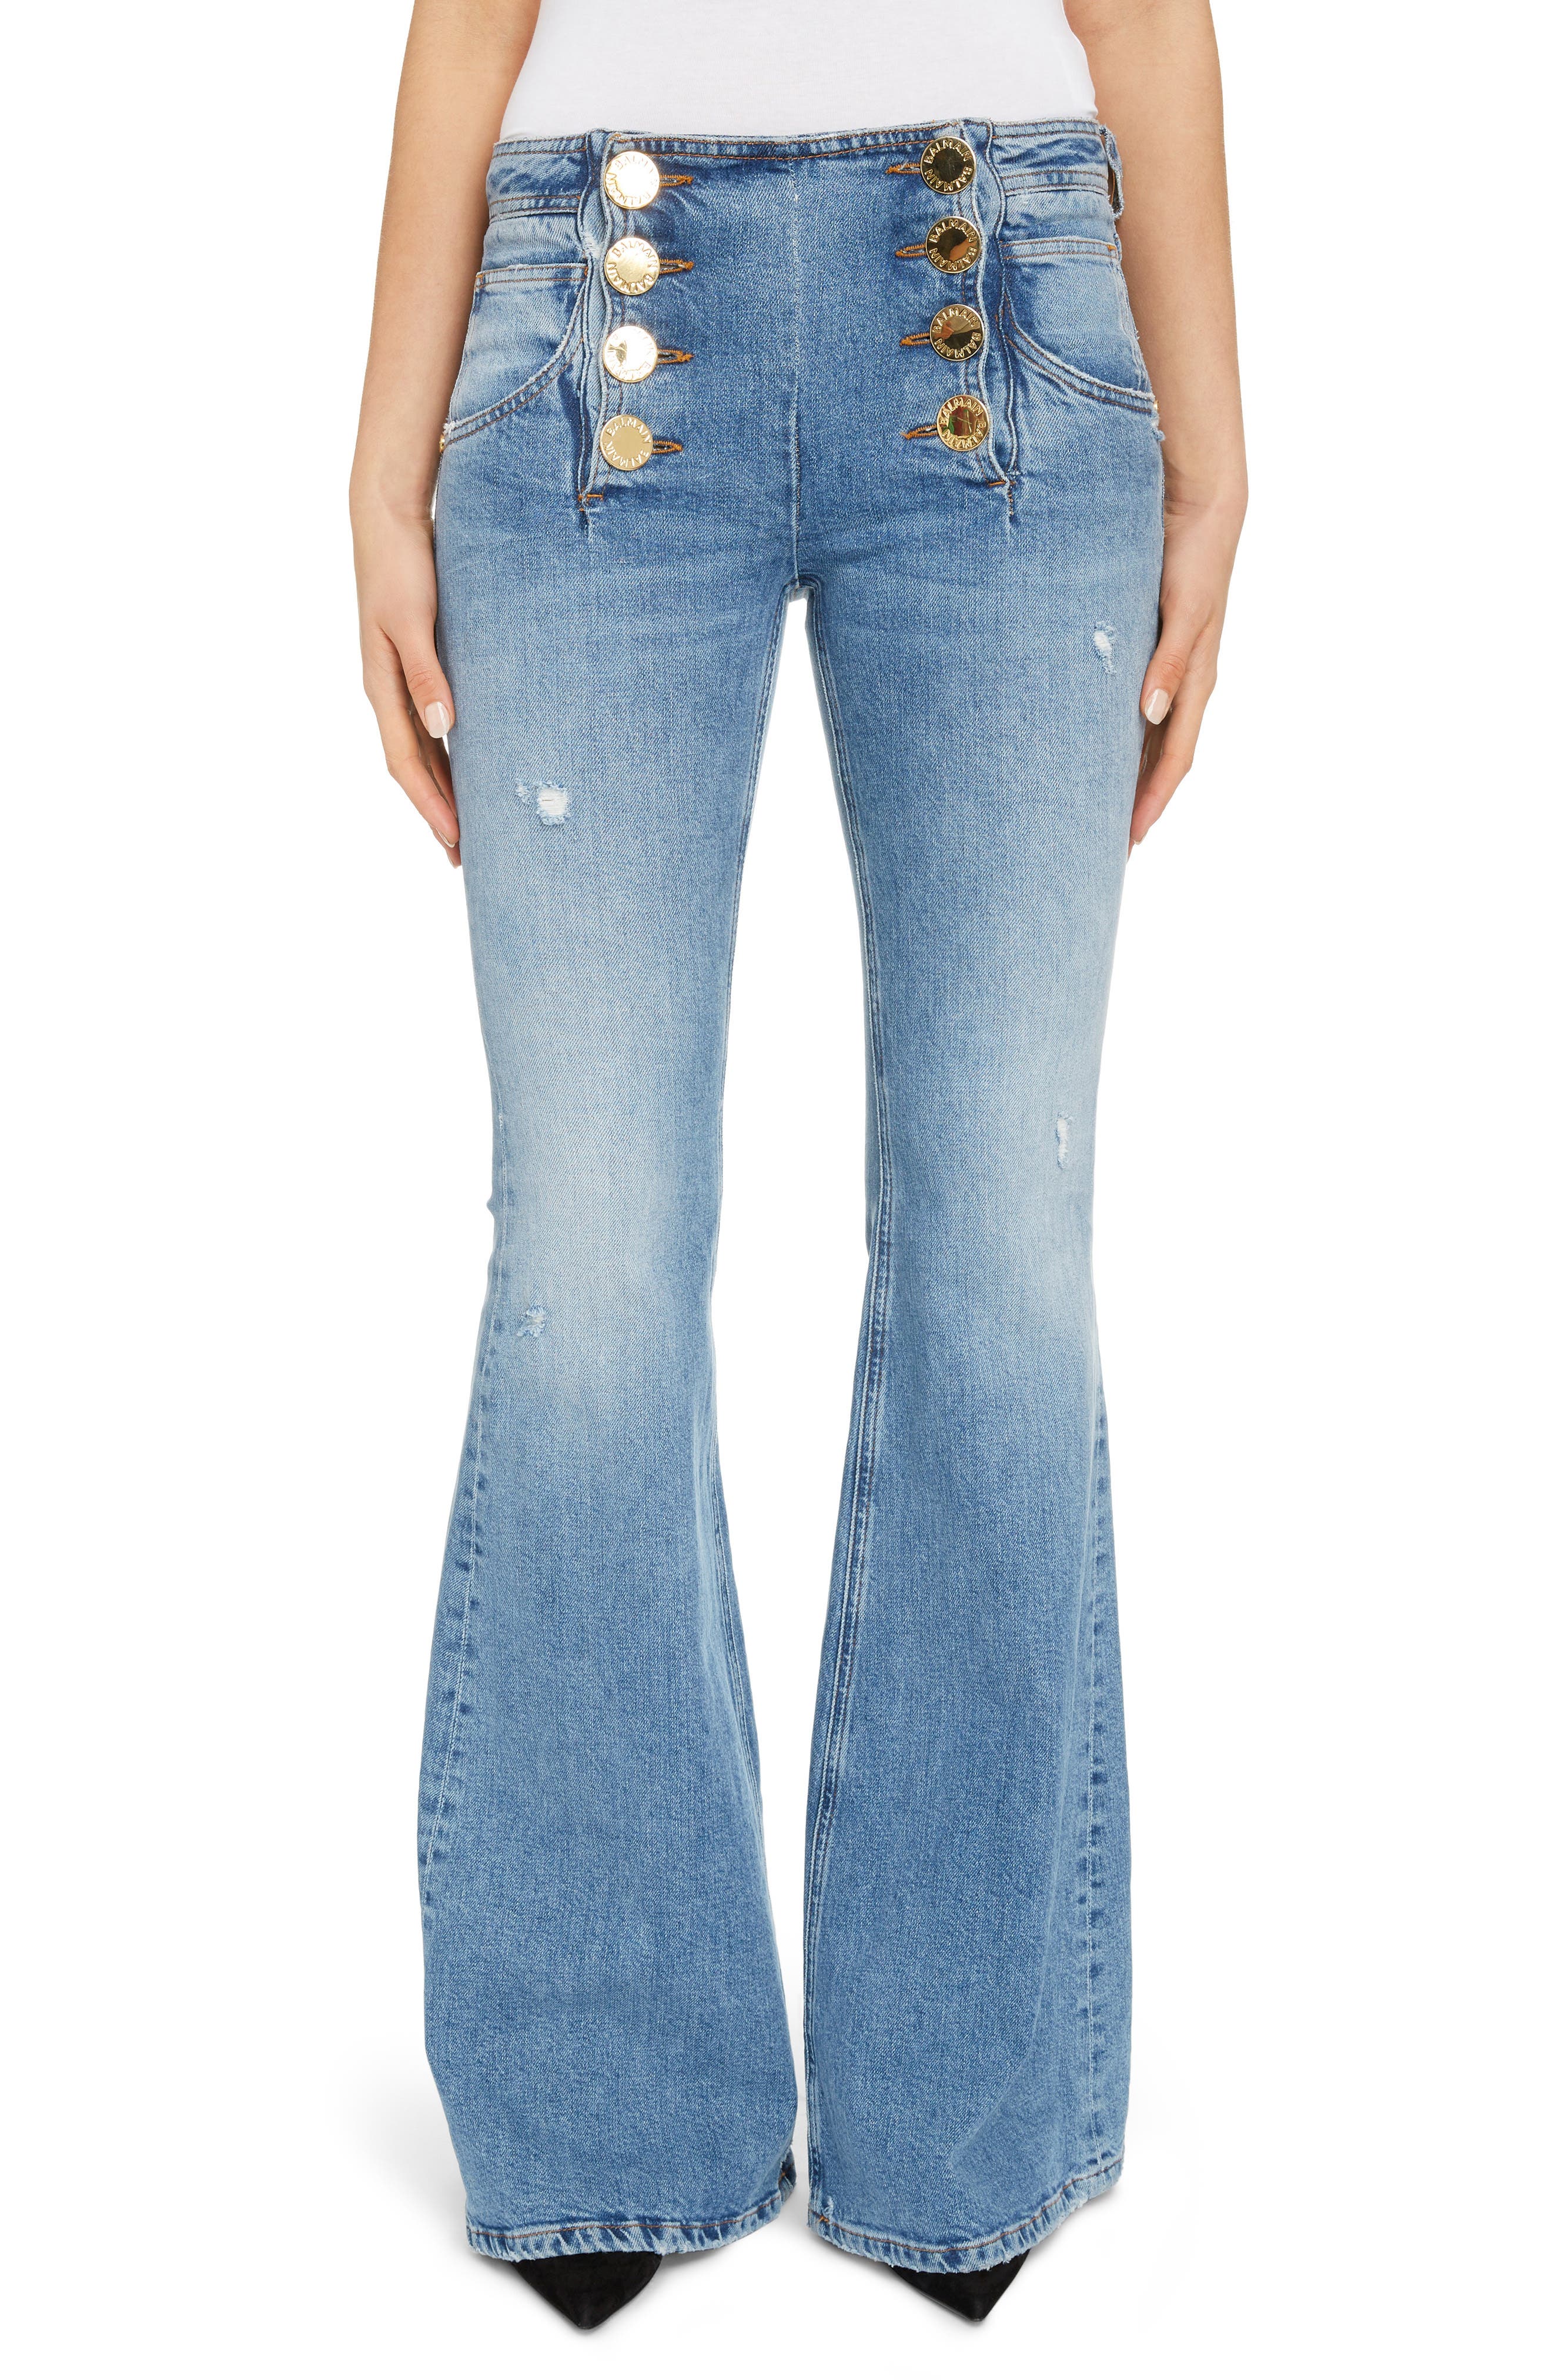 balmain type jeans